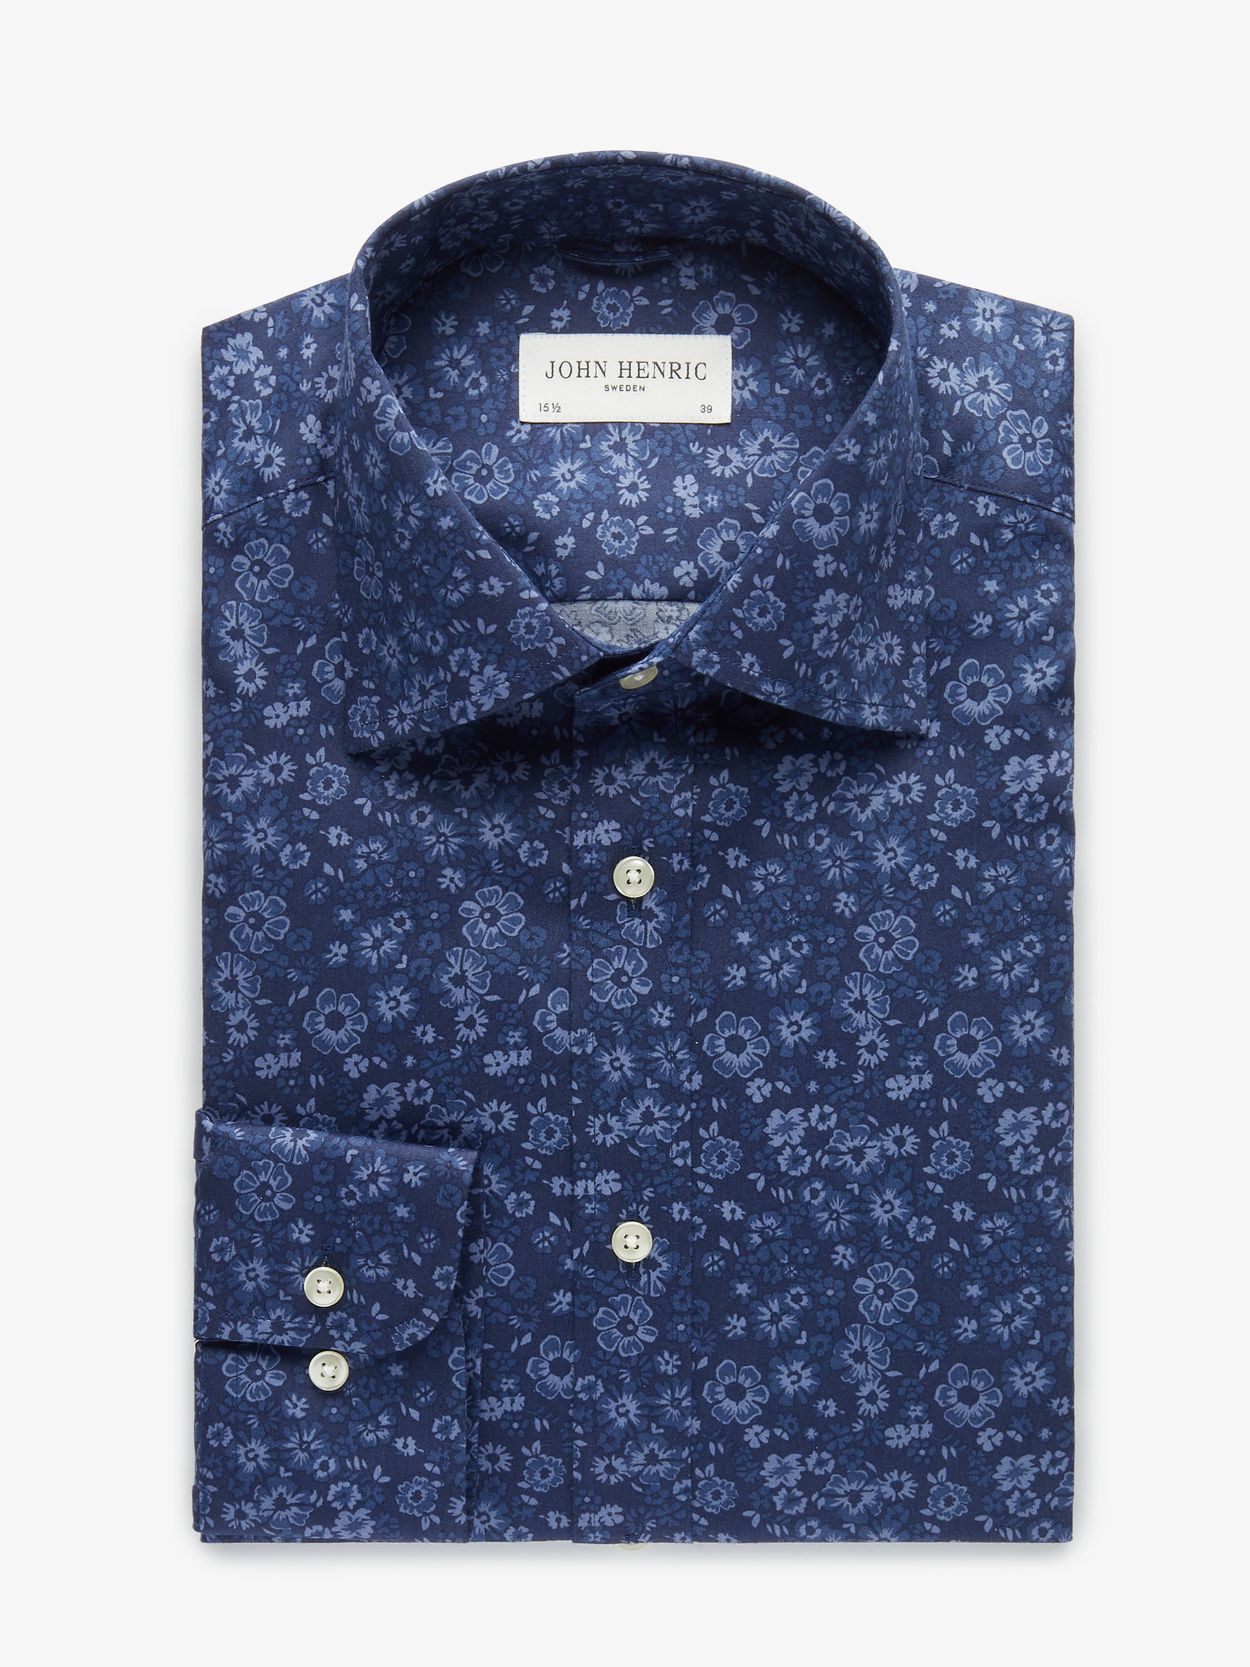 Blue Floral Print Shirt